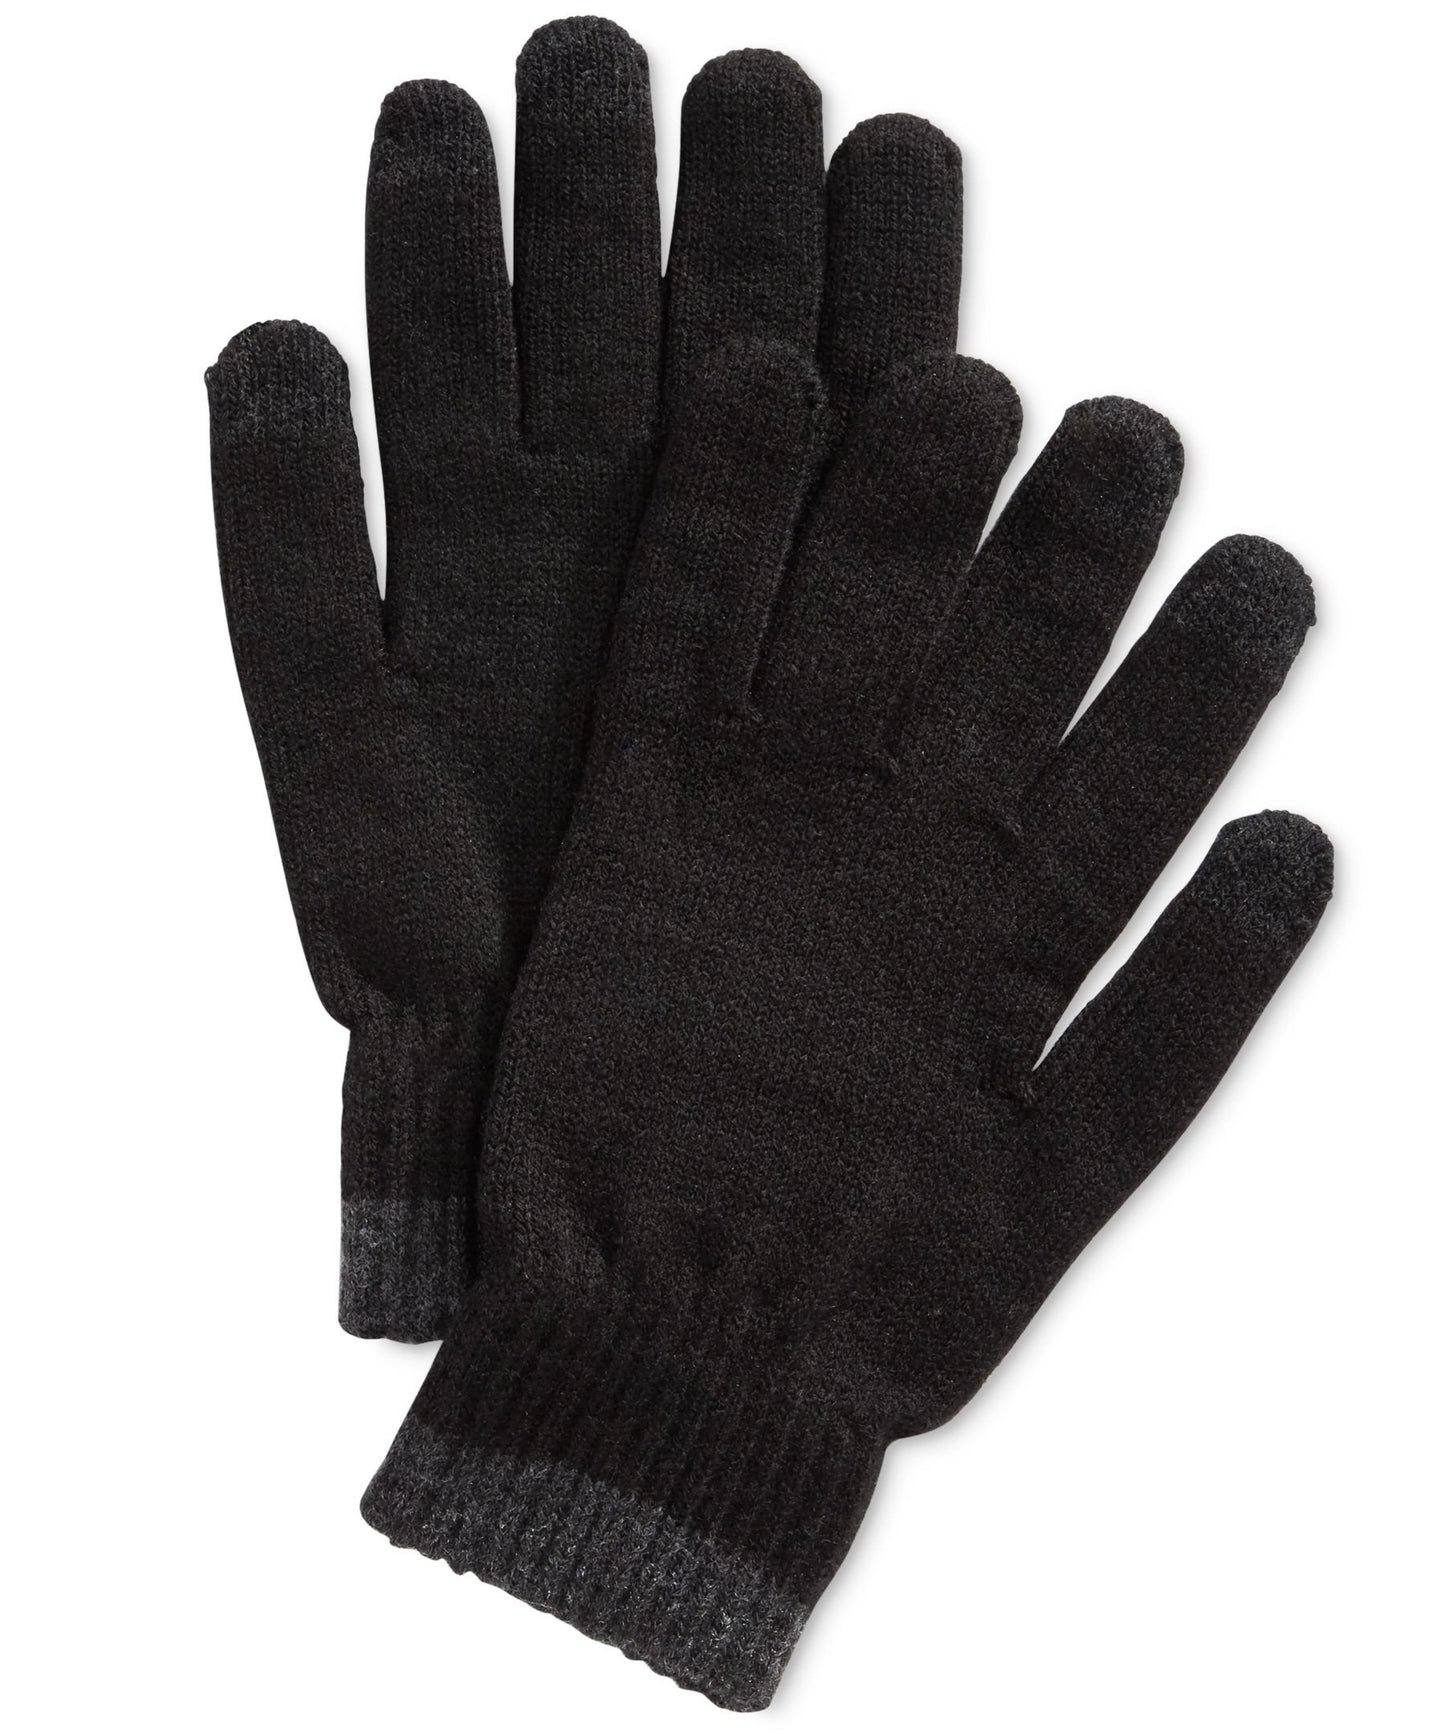 Alfani Texting Gloves Black / Grey One Size Fits Most